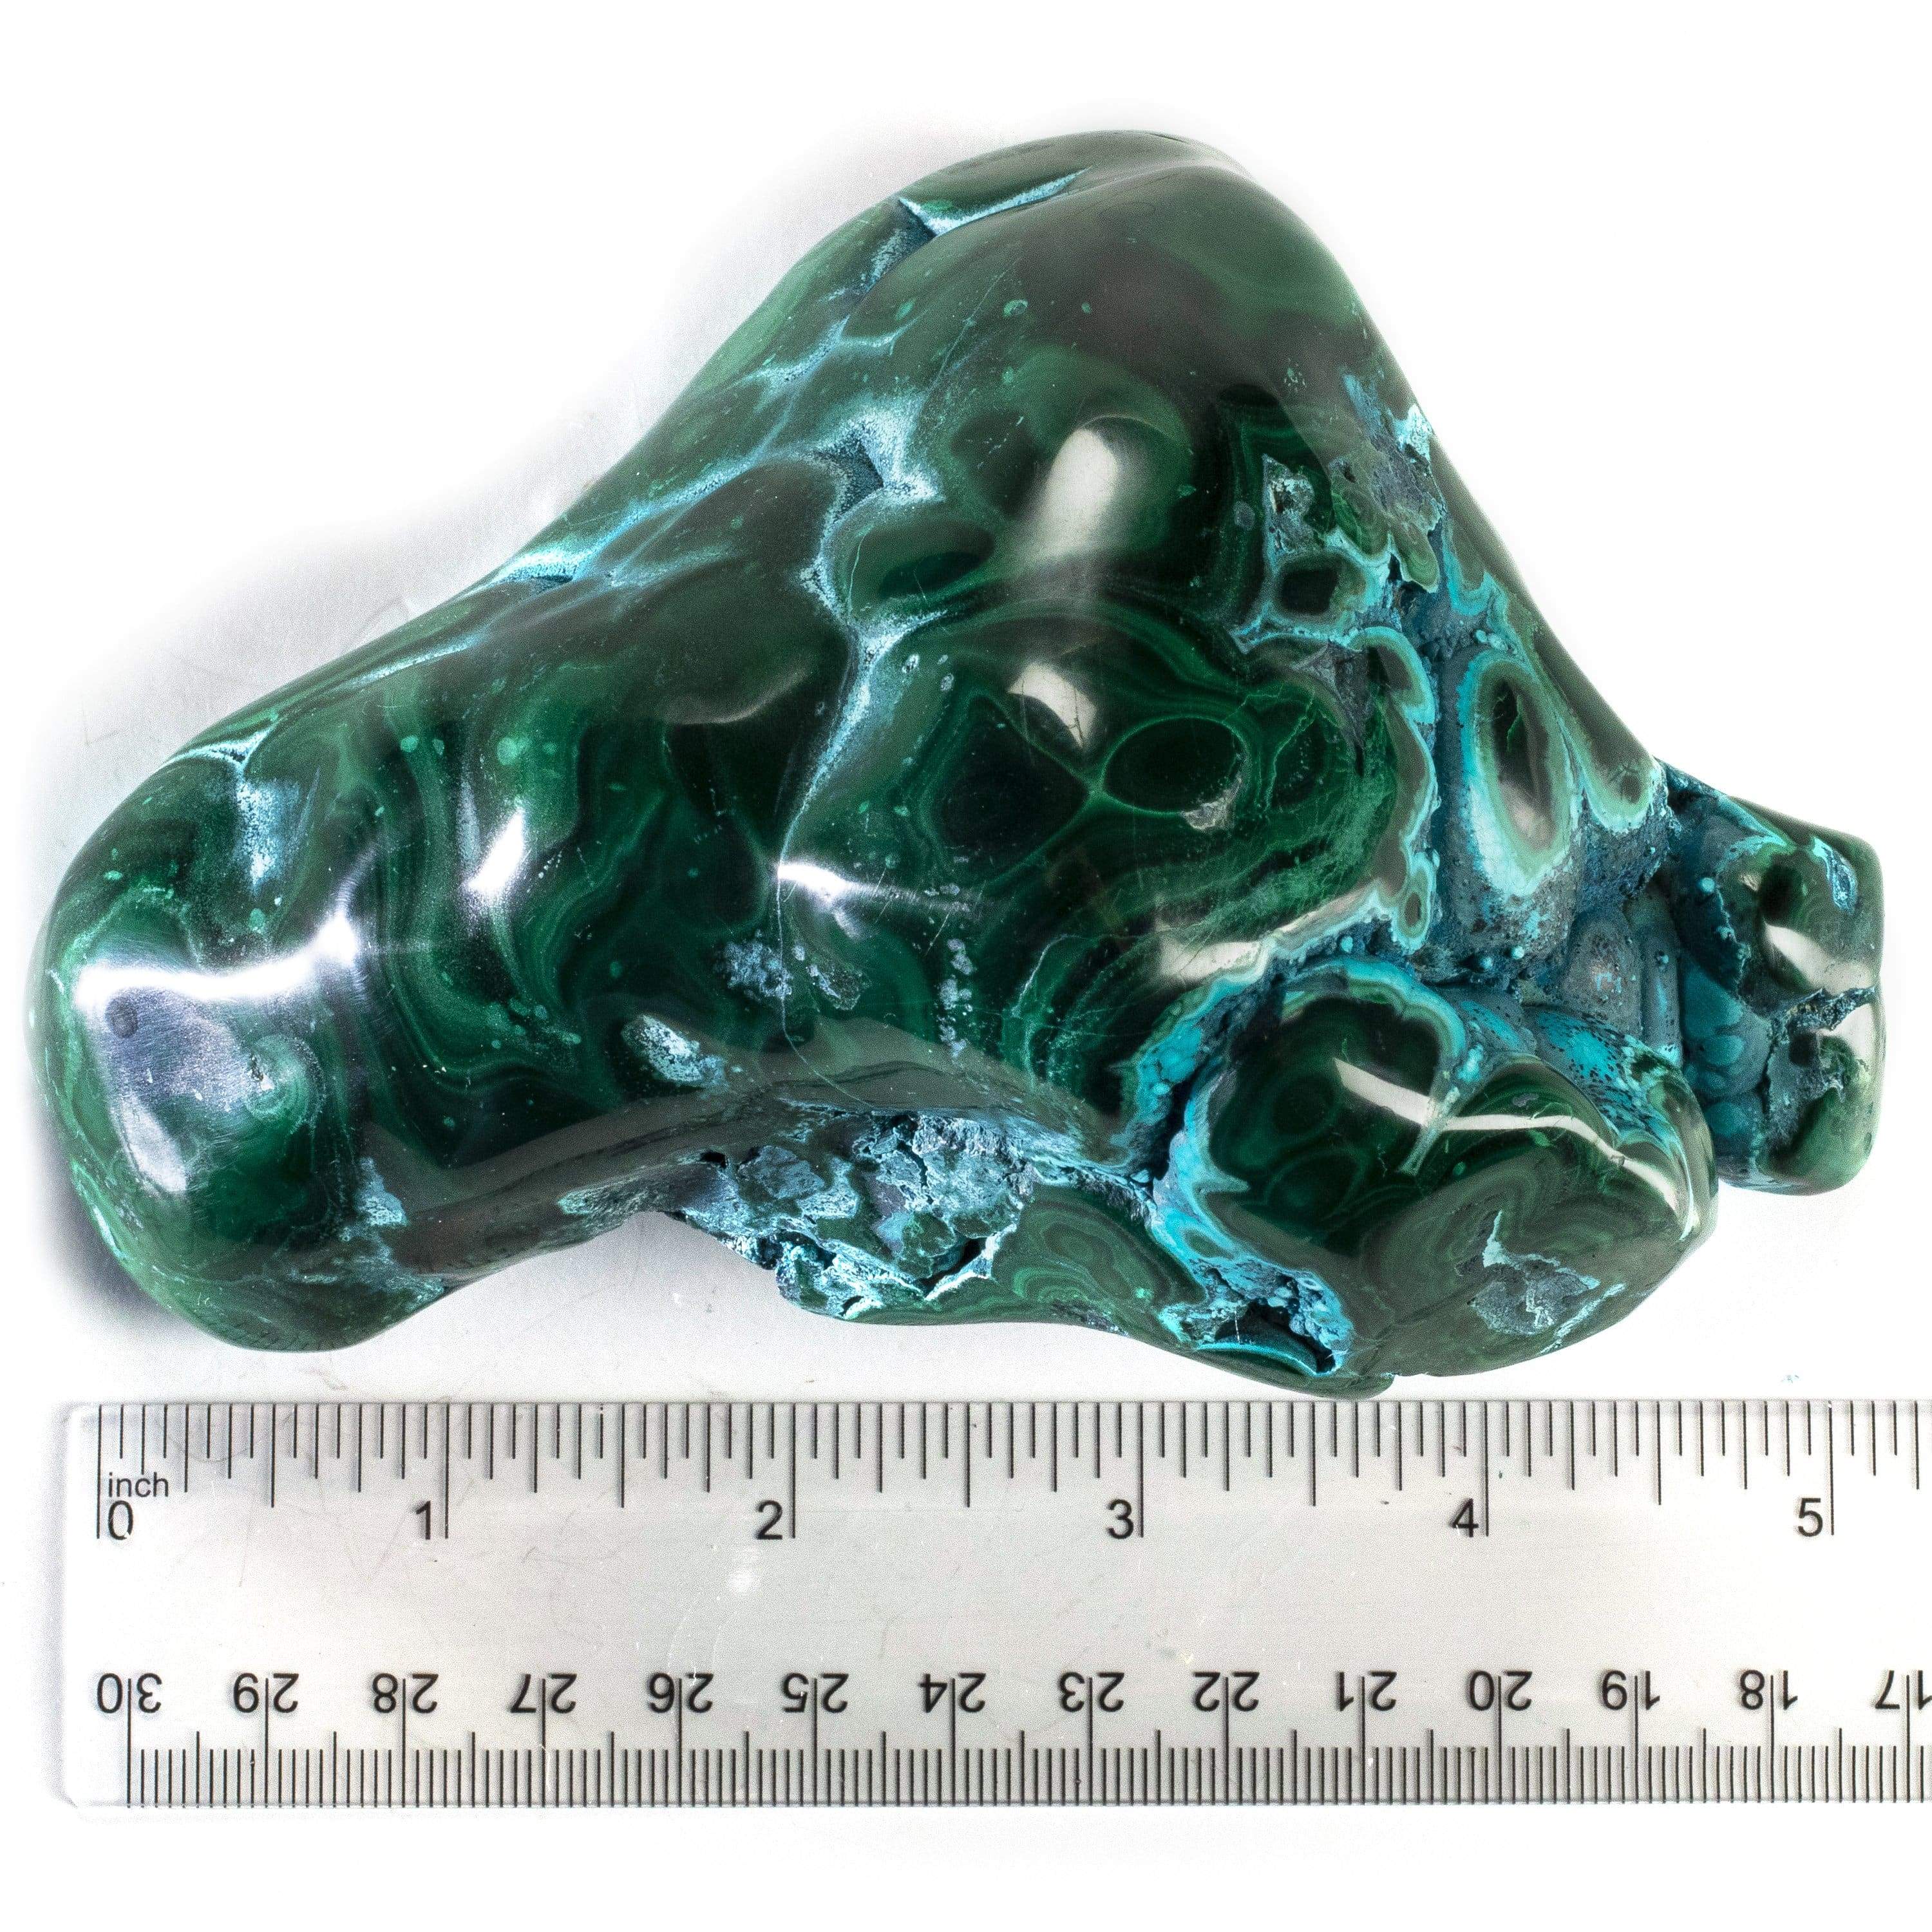 Kalifano Malachite Rare Natural Green Malachite with Blue Chrysocolla Freeform Specimen from Congo - 0.8 kg / 1.7 lbs MAC800.001